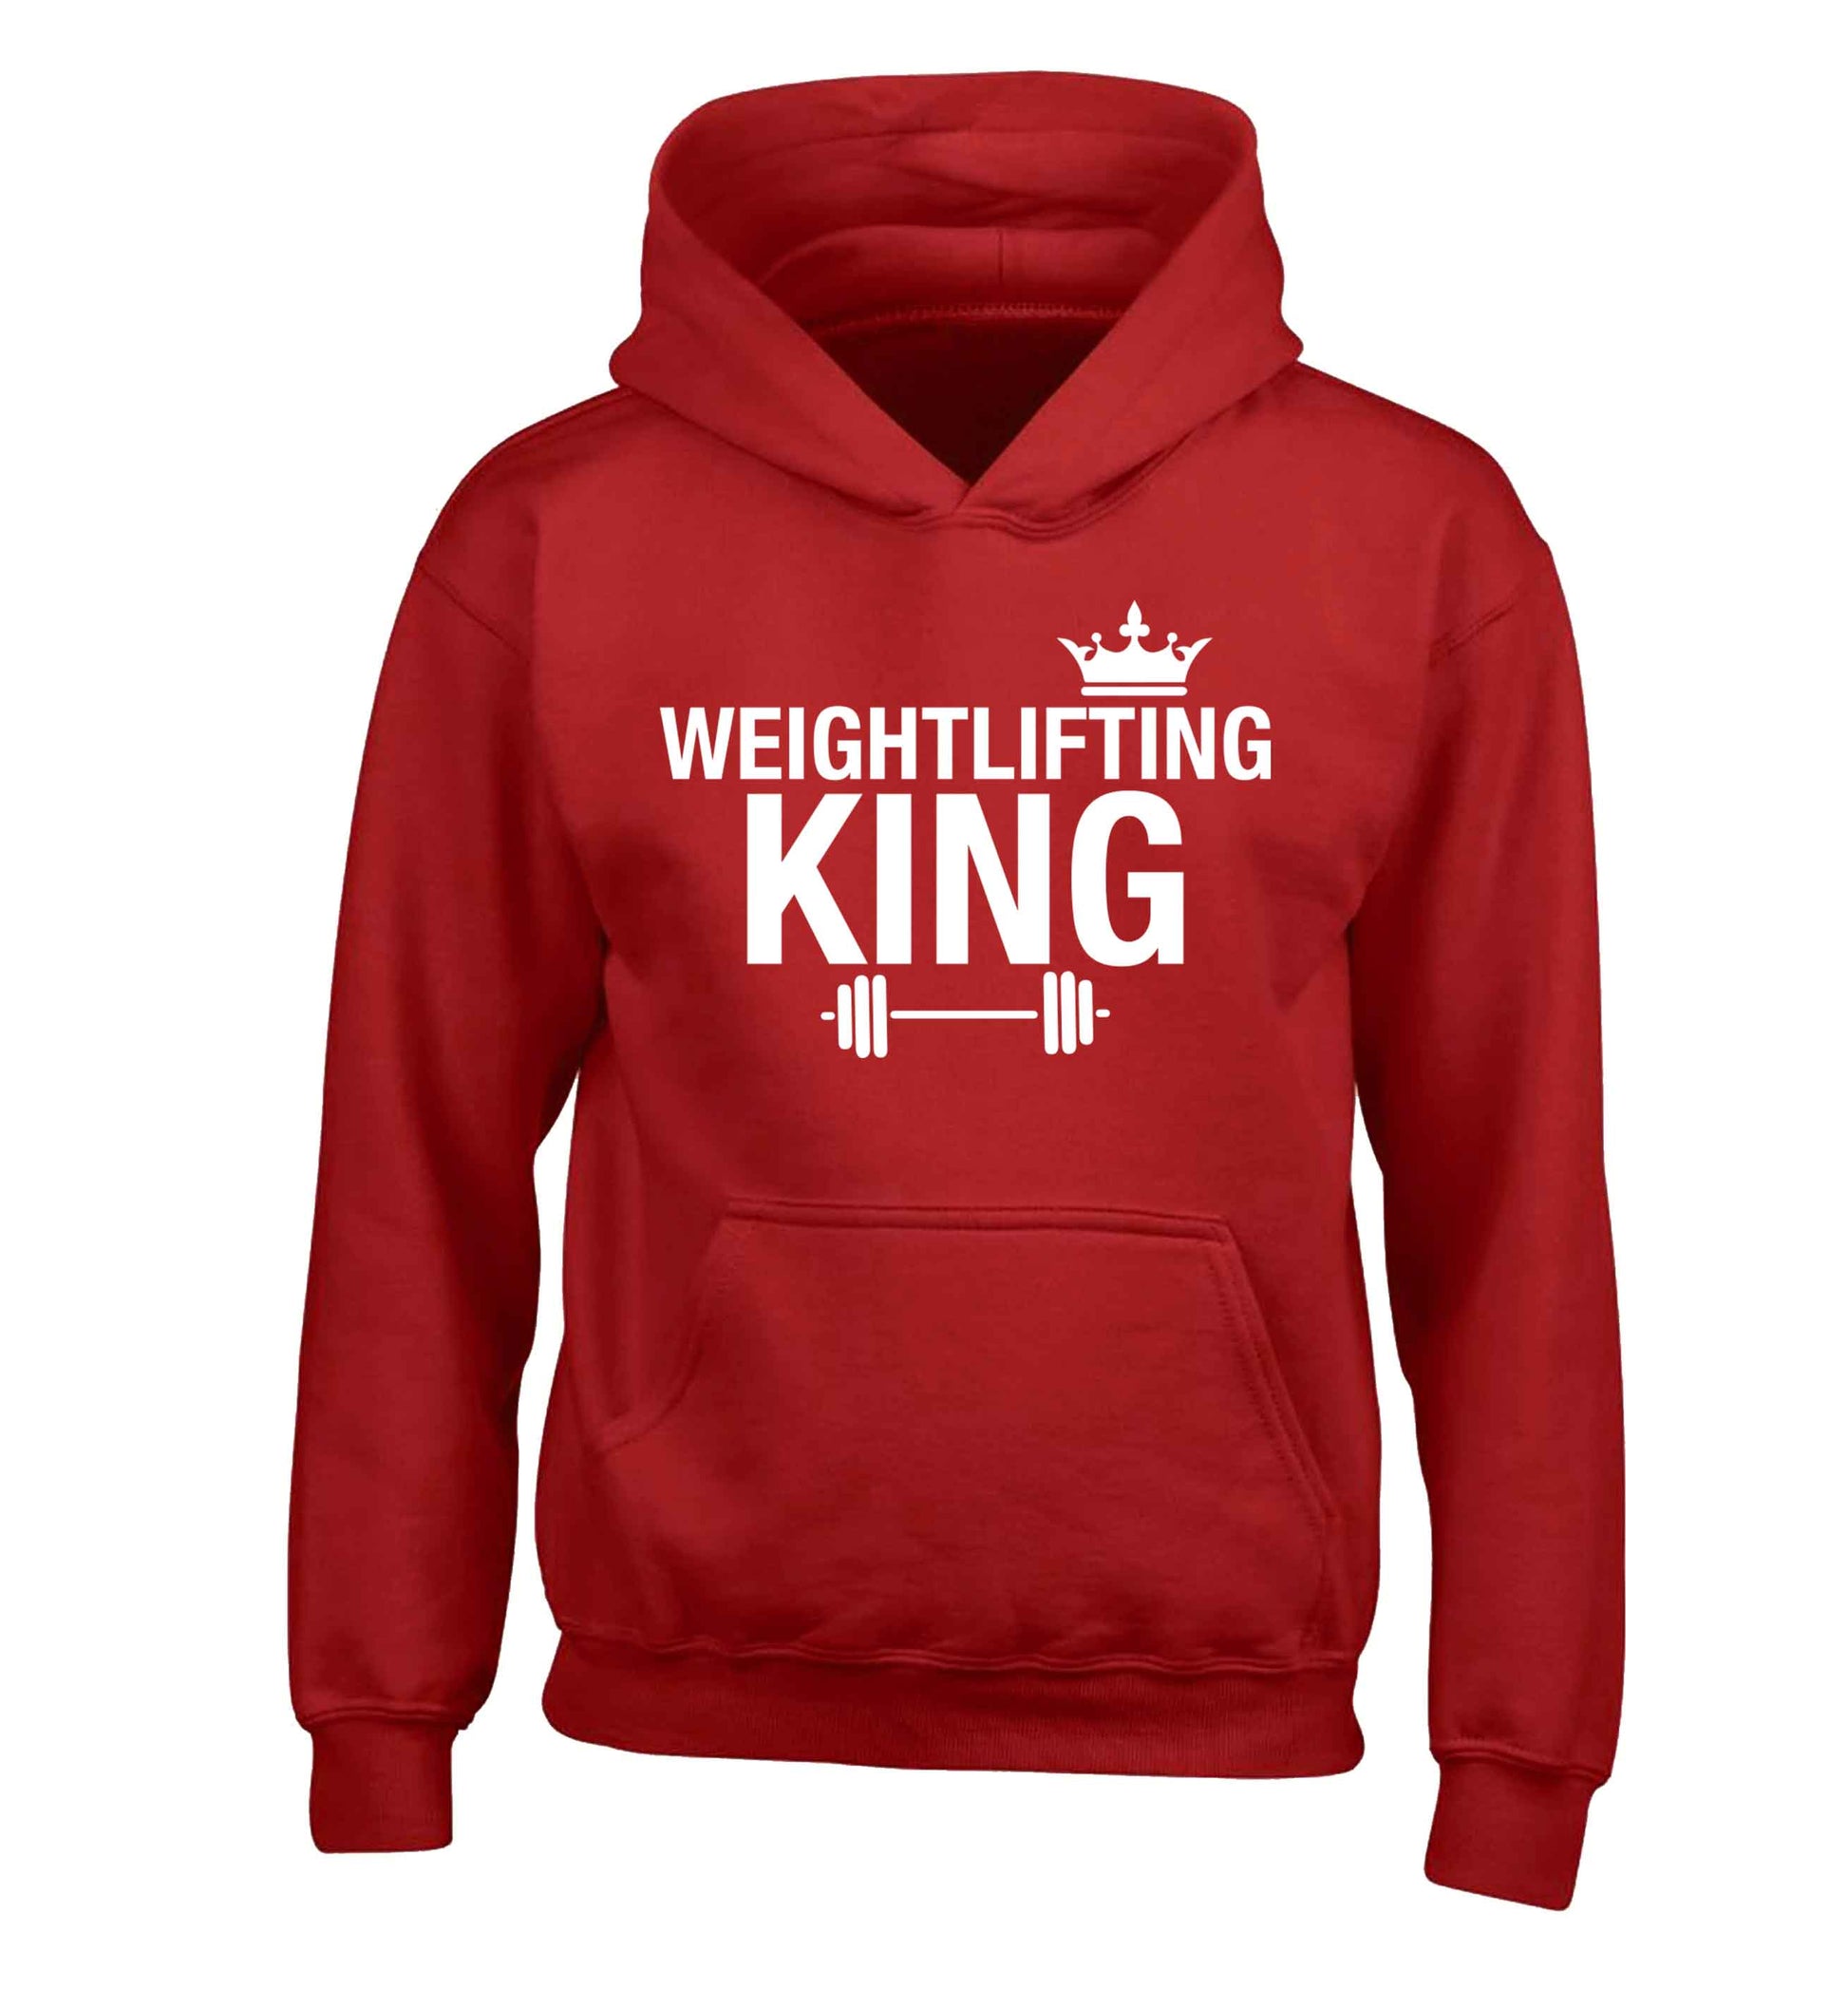 Weightlifting king children's red hoodie 12-13 Years